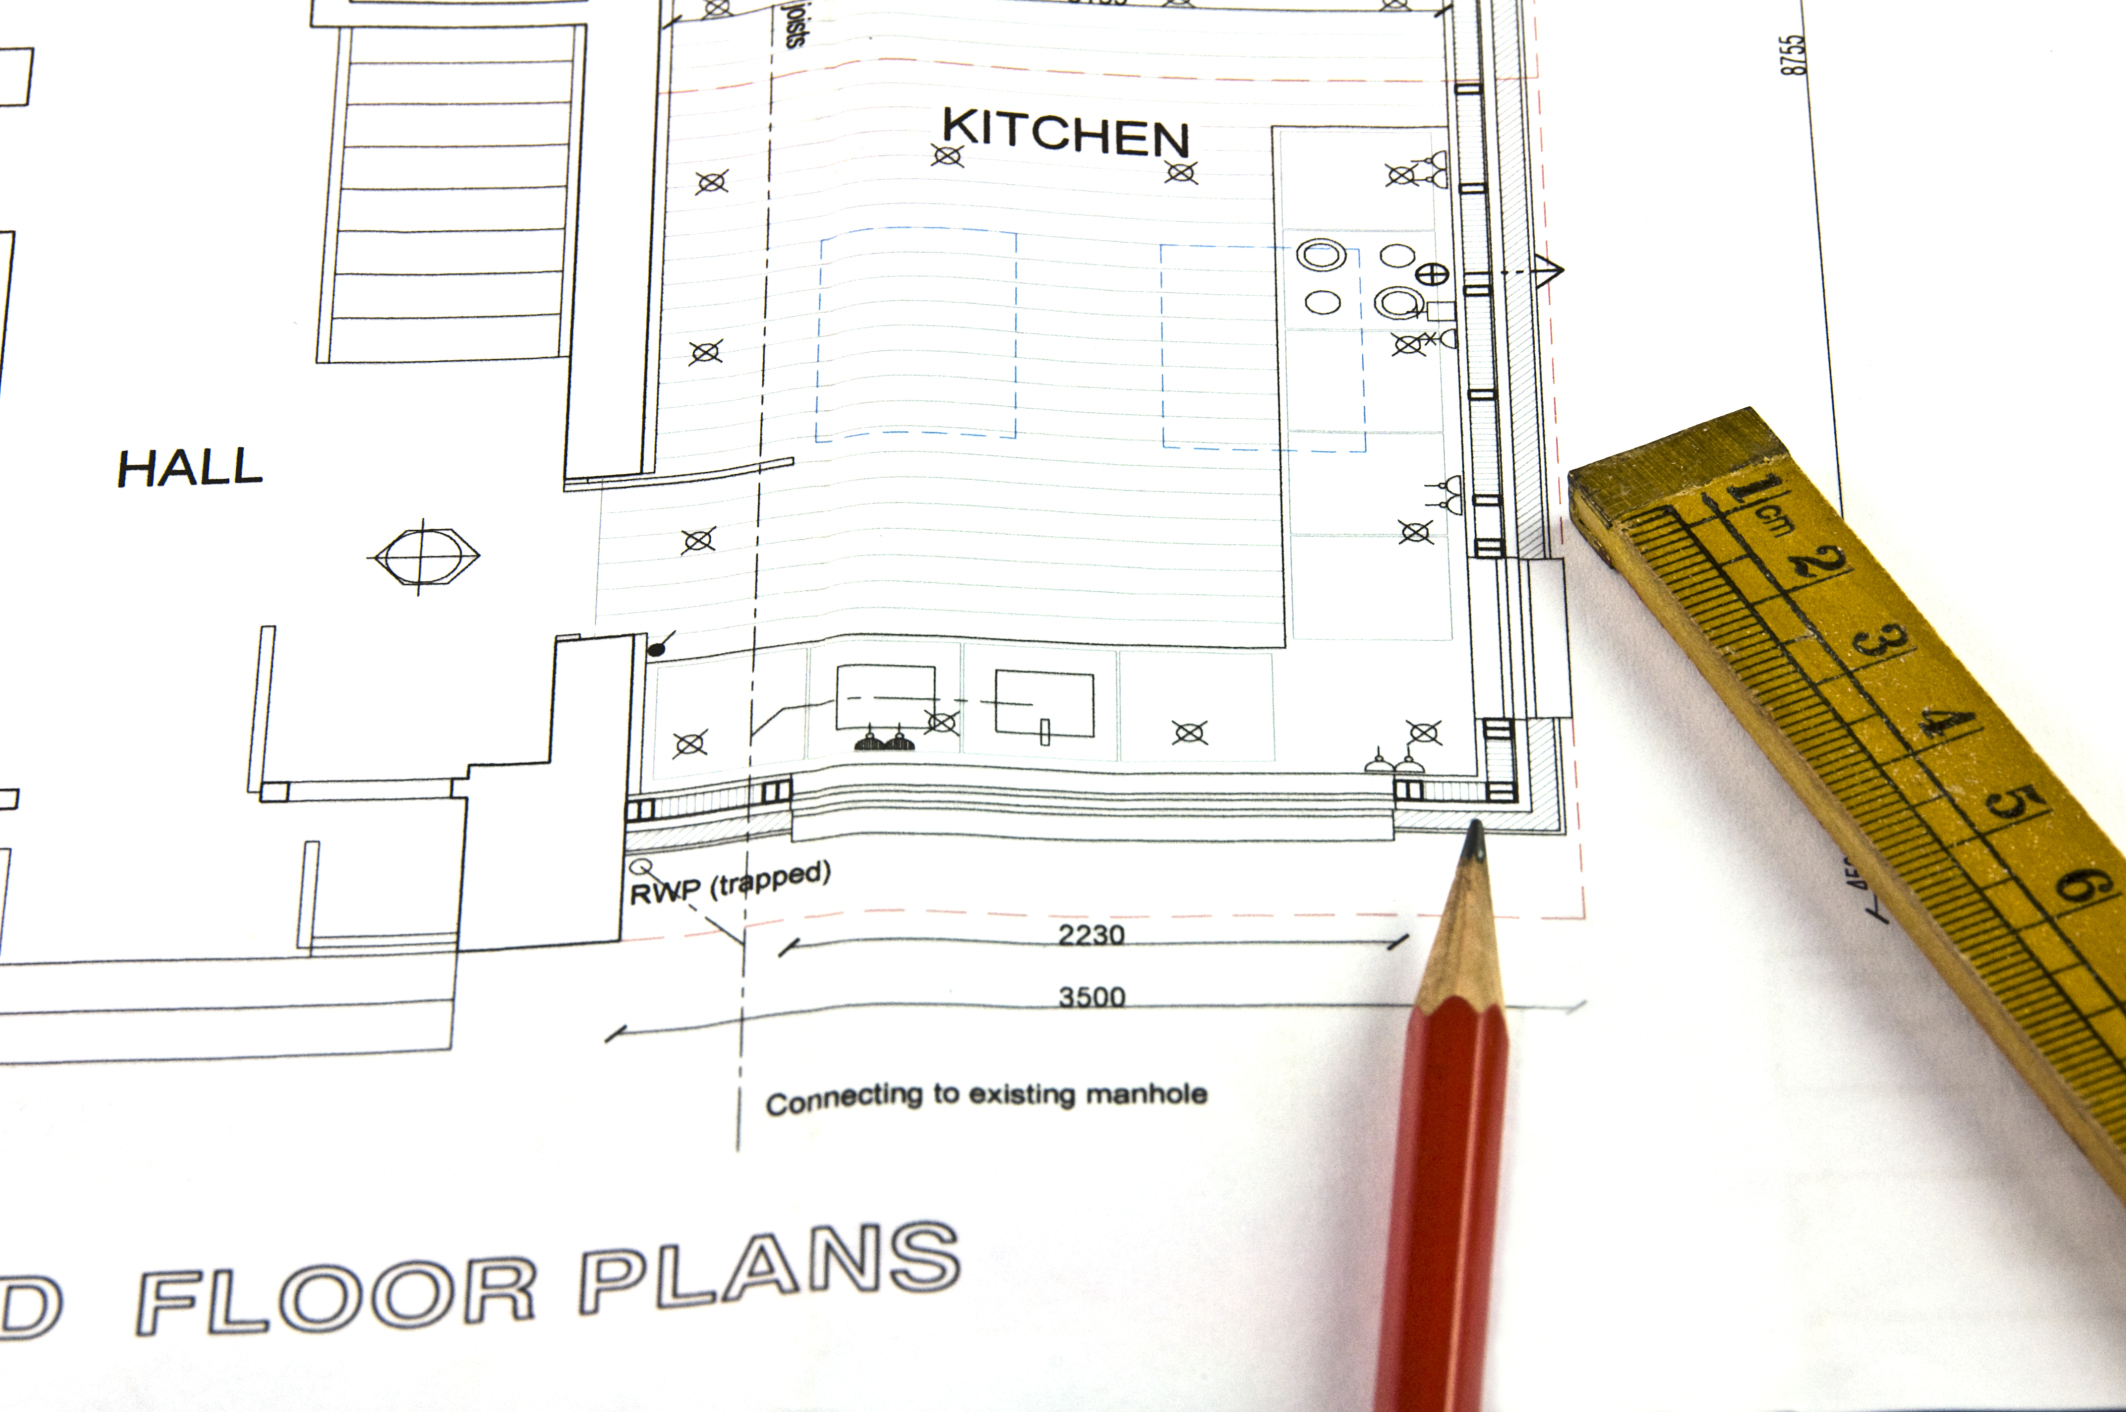 5 Marla House Plan | 5 Marla House Map 25*45 | 5 Marla House Plan In  AutoCAD | House Floor Plan - YouTube